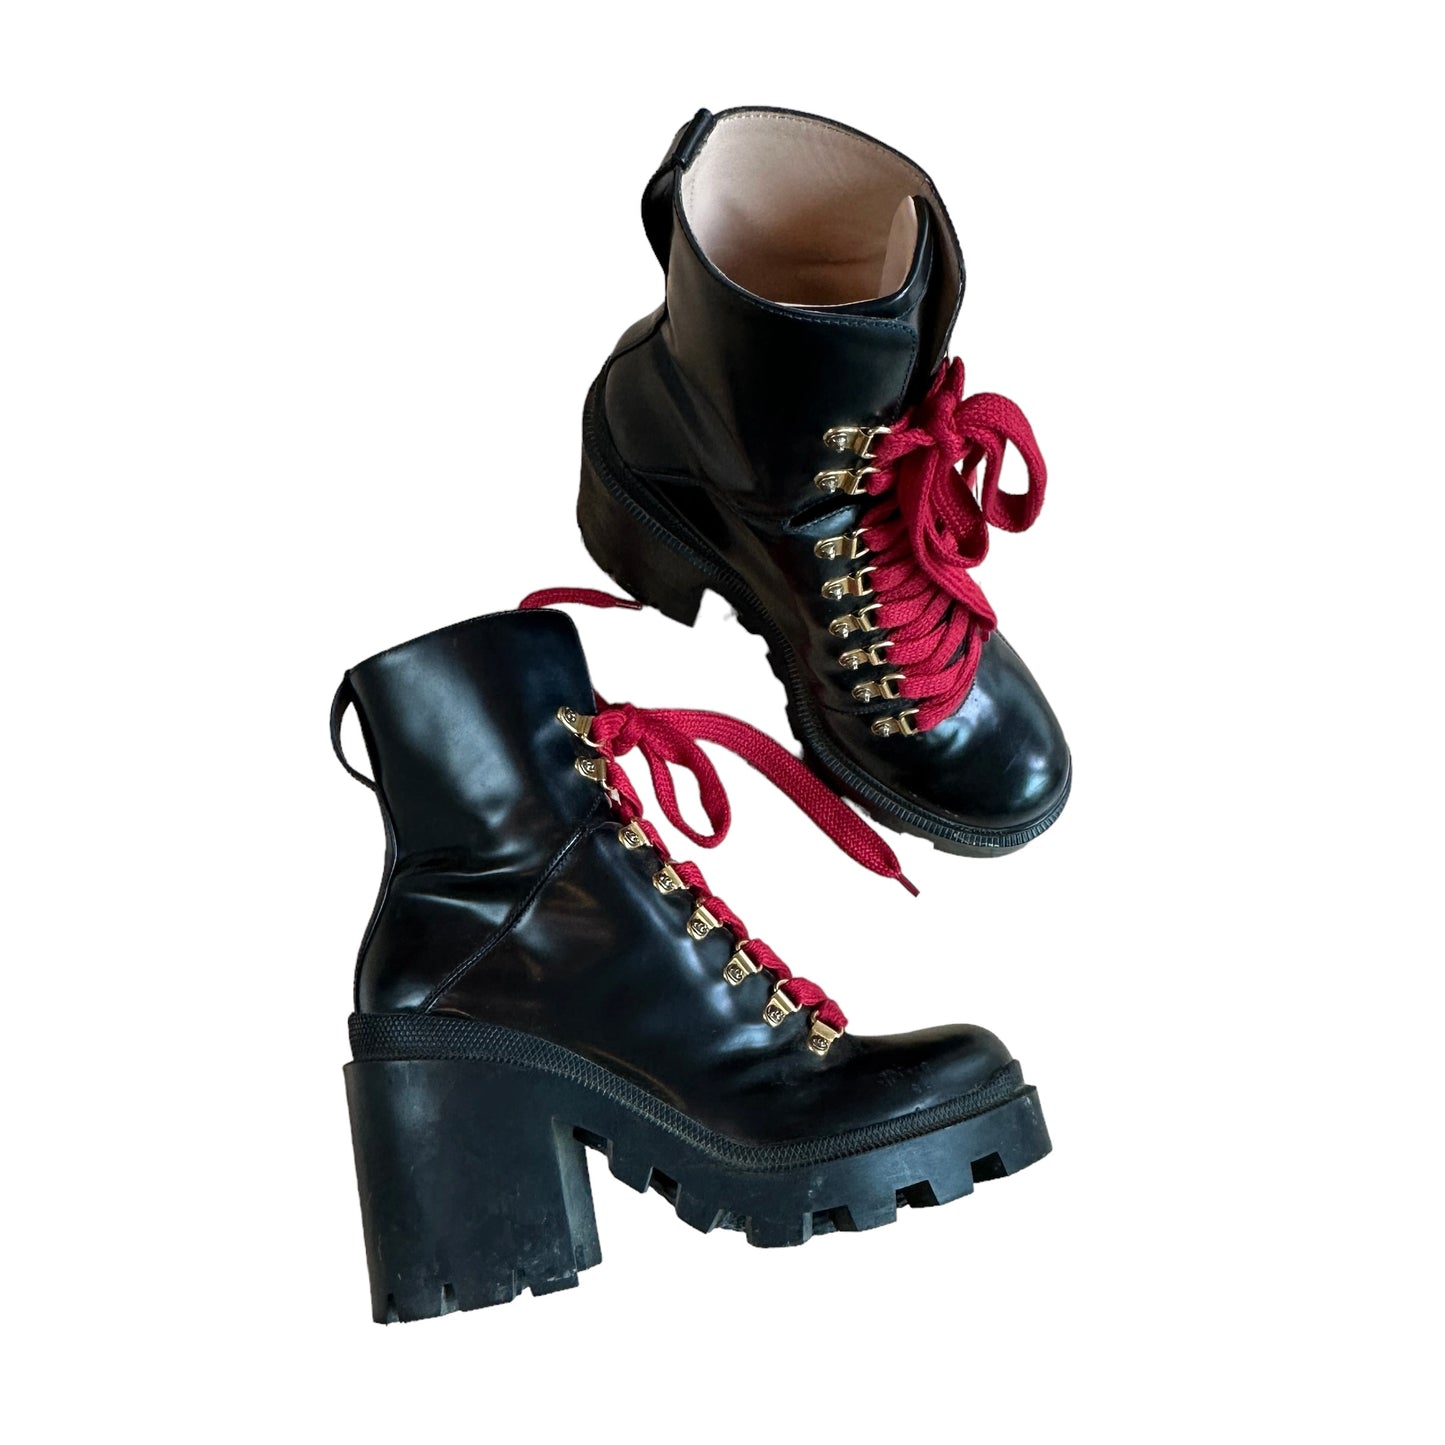 Black Leather Combat Boots - 9